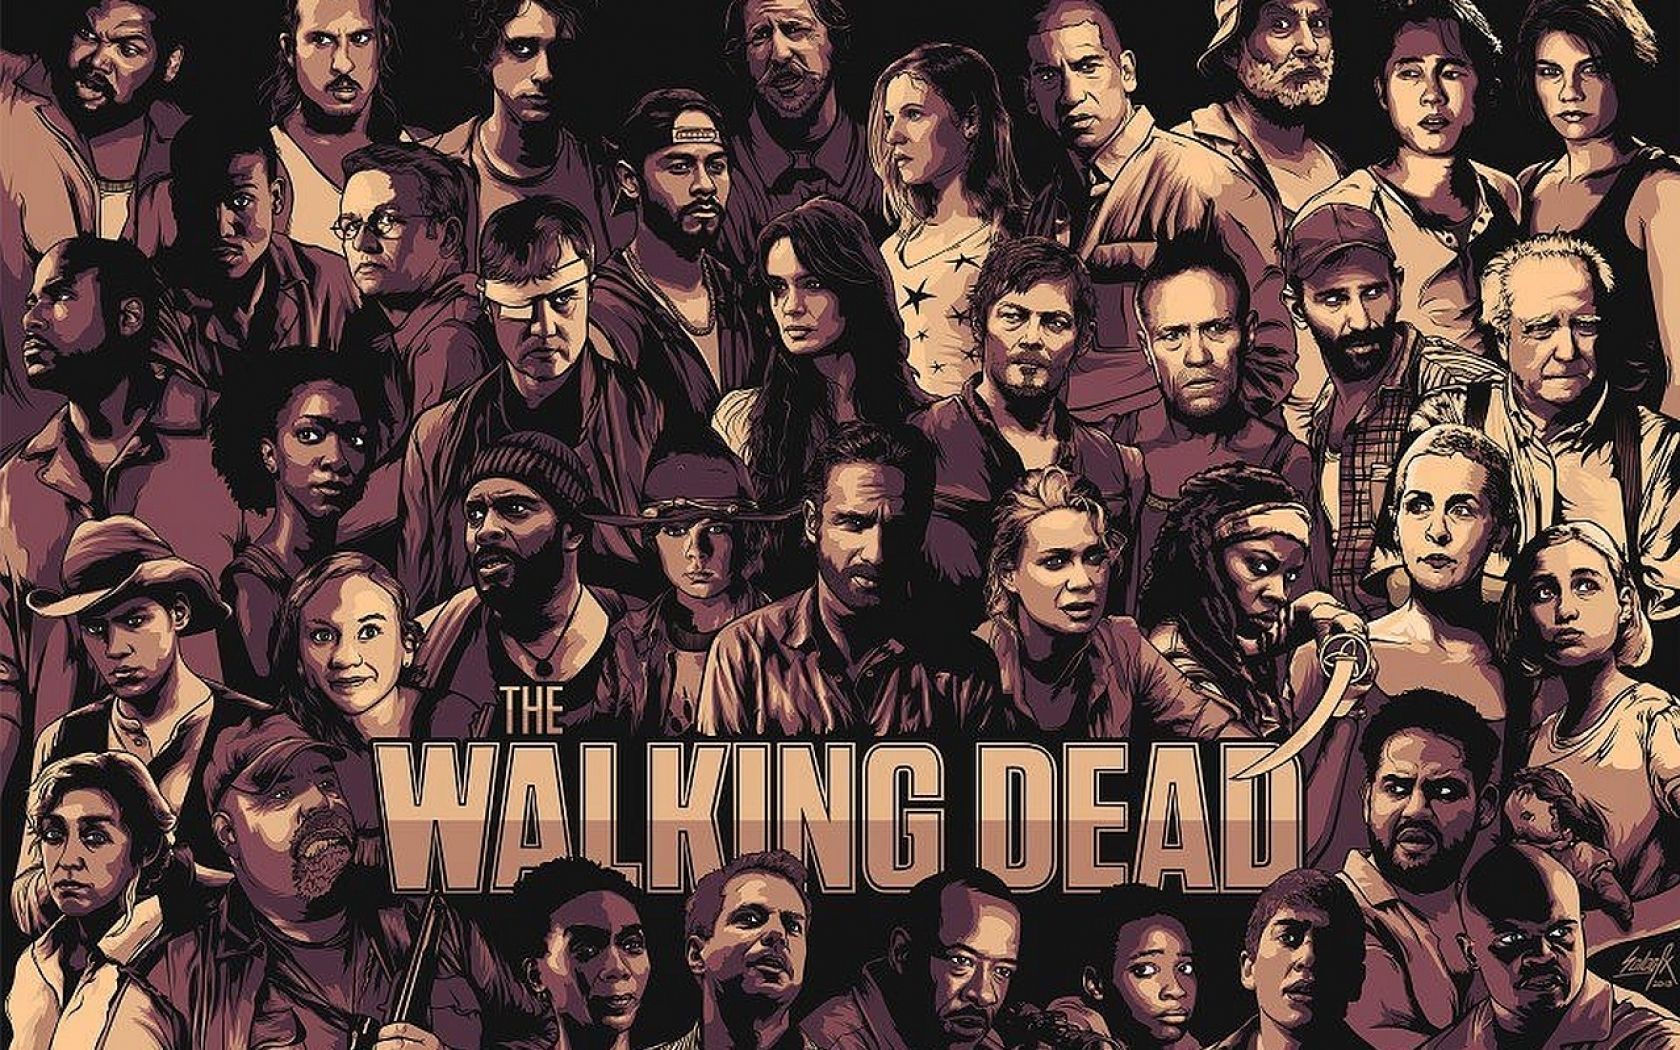 The Walking Dead wallpaper HD 2016 Wallpapers, Backgrounds